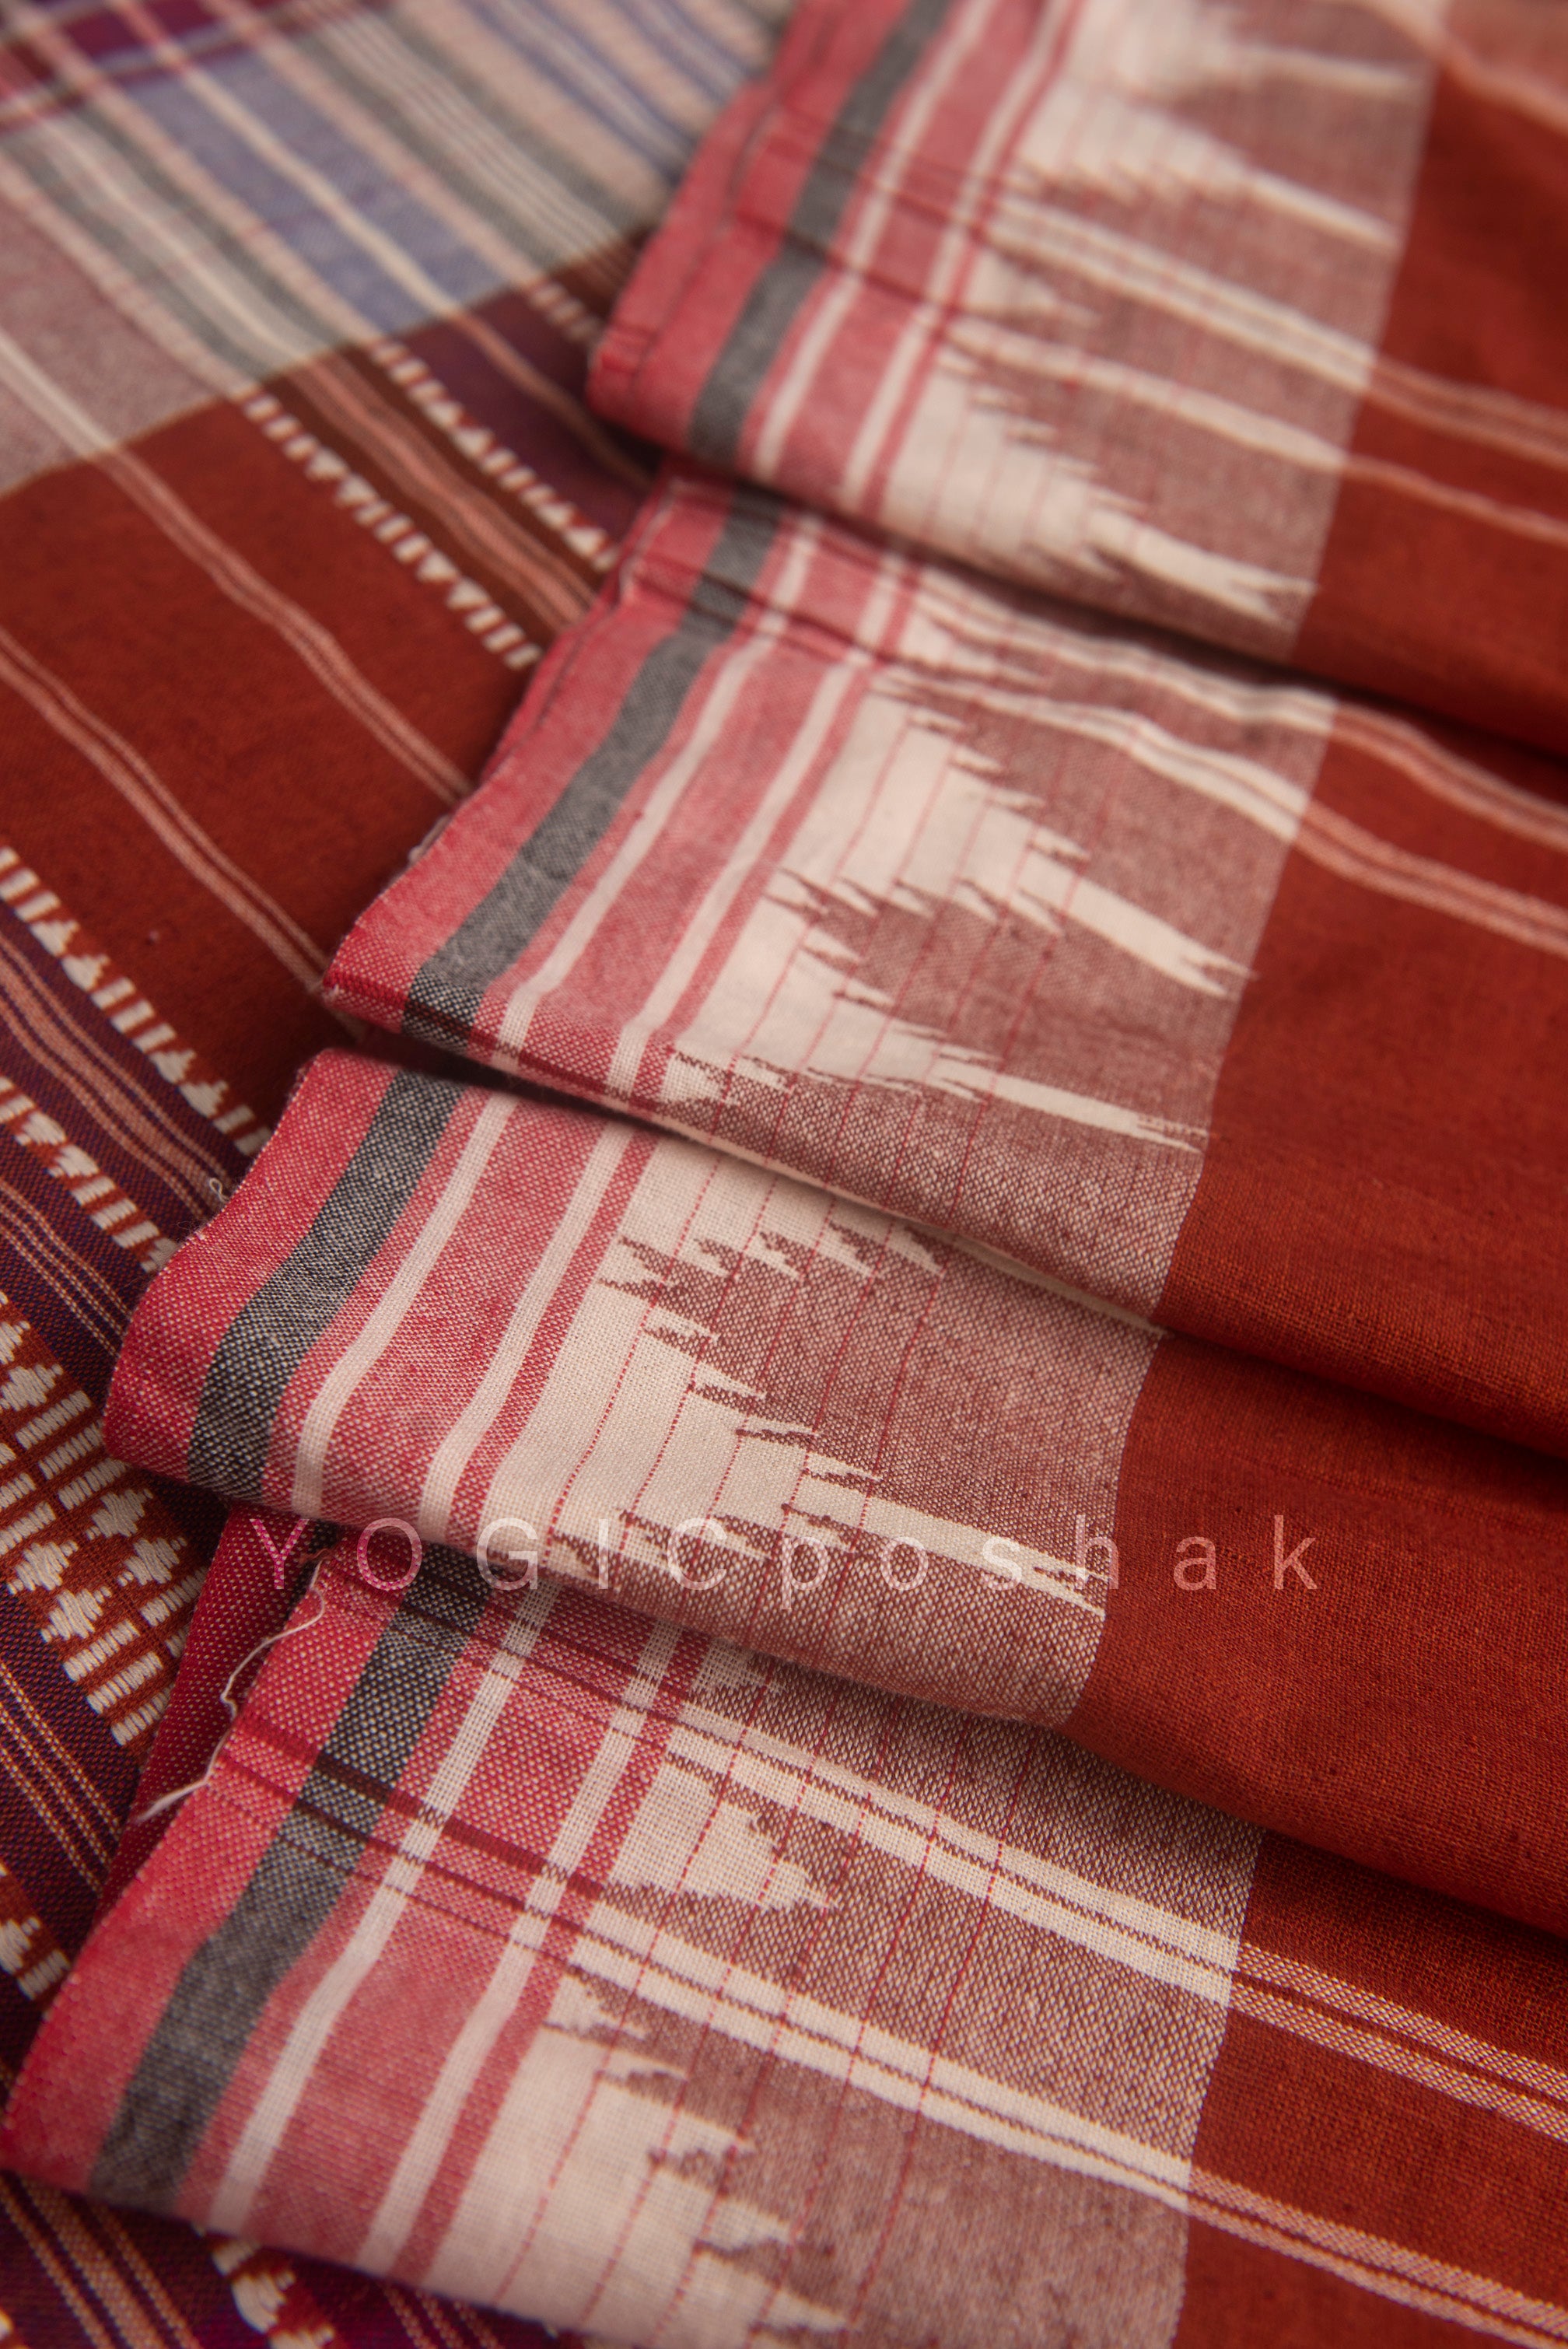 Kotpad handloom cotton saree | natural dyed